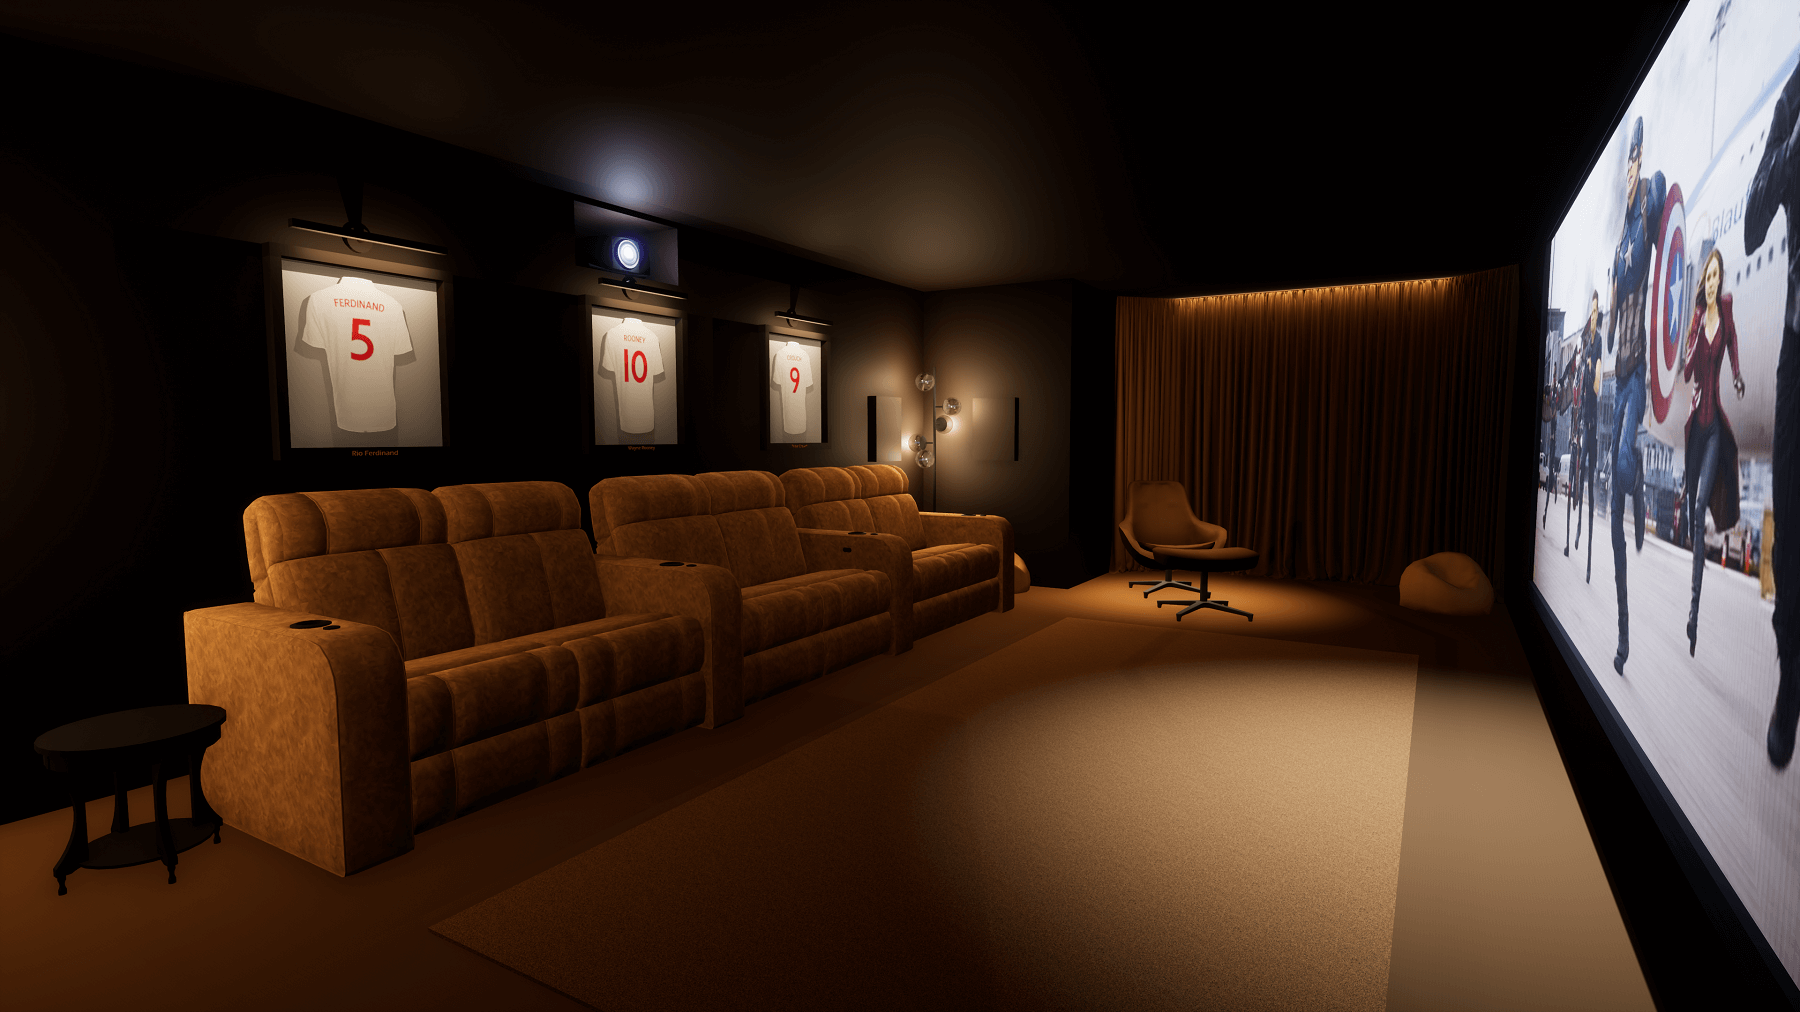 Our Top 40 Home Cinema Room Ideas & Designs